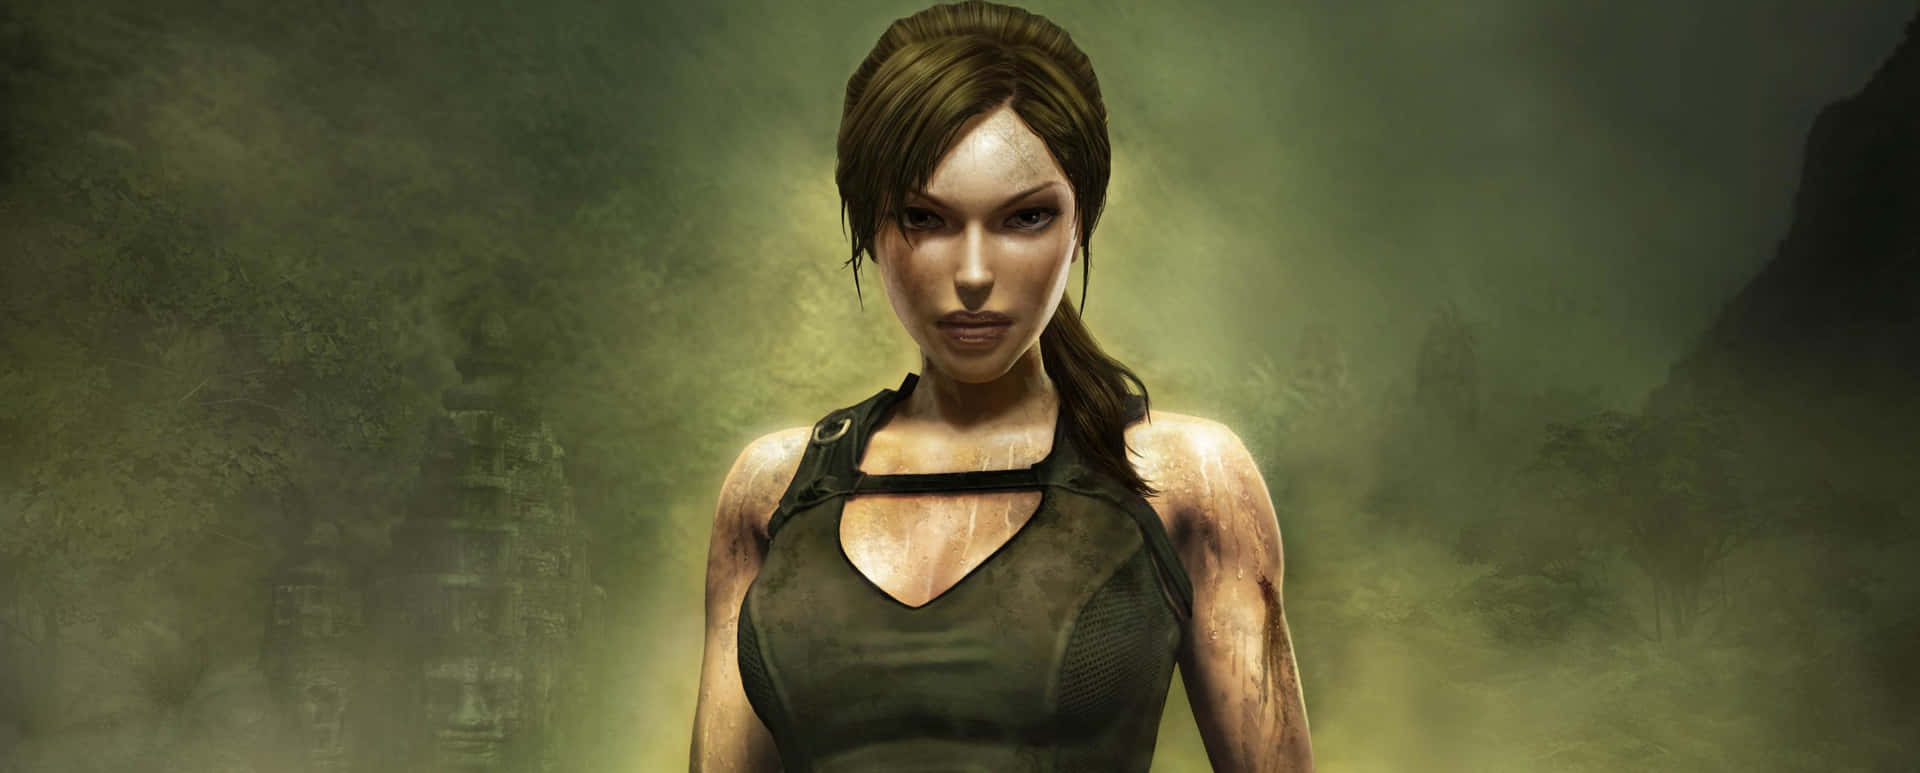 Fondode Pantalla De Rise Of The Tomb Raider En Tono Verde Ahumado Lara 3440x1440p.